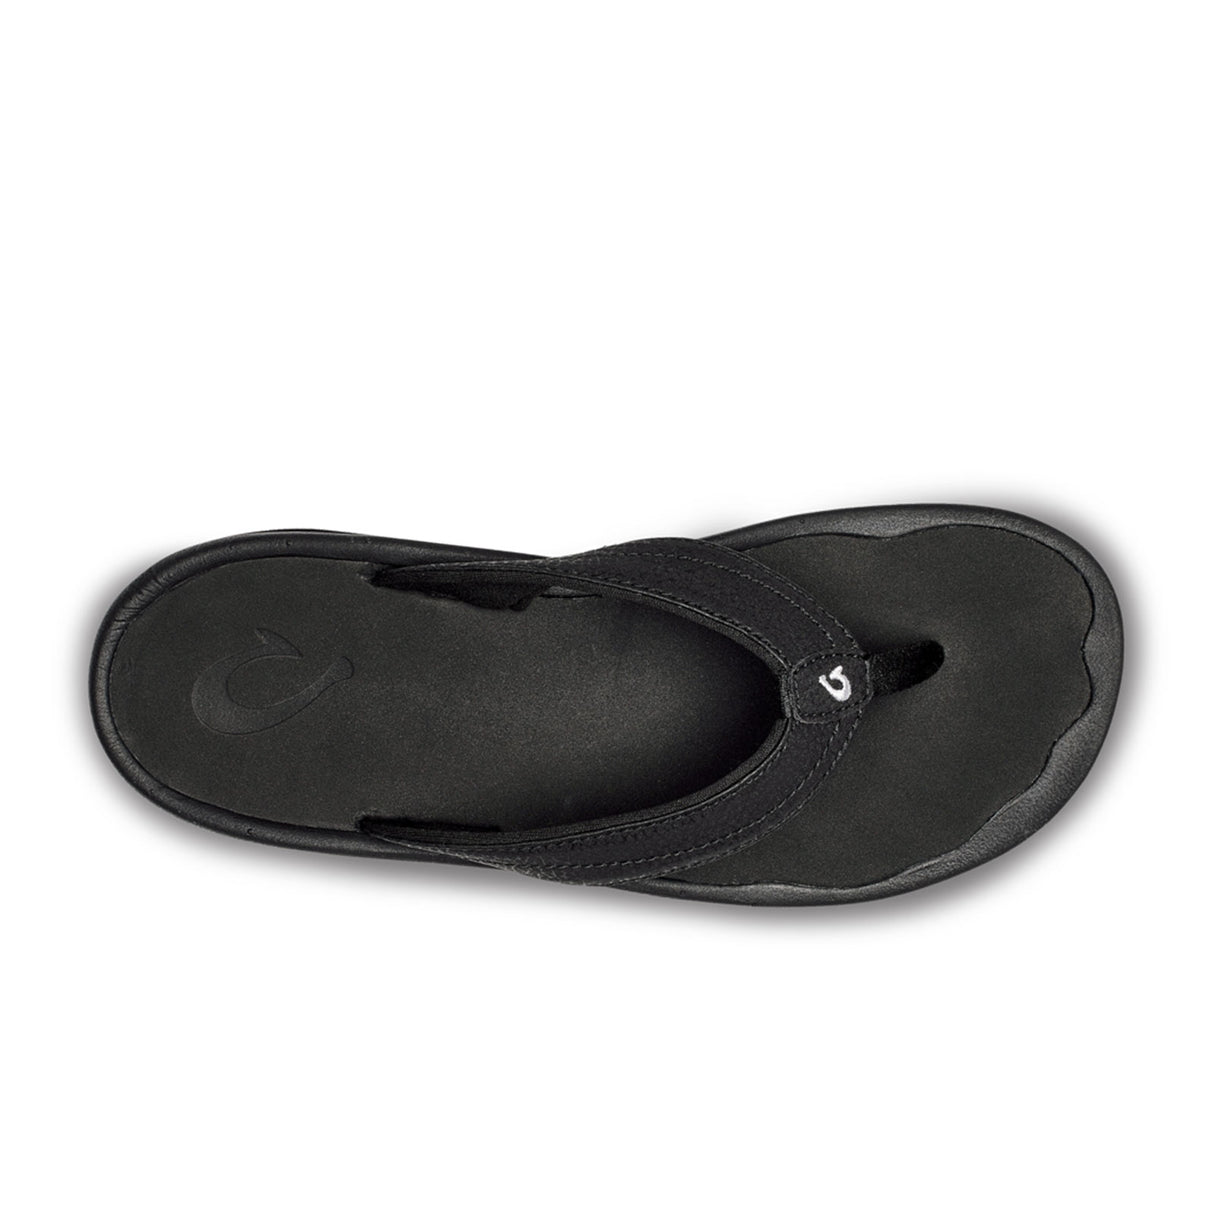 OluKai 'Ohana Sandal (Women) - Black/Black Sandals - Thong - The Heel Shoe Fitters